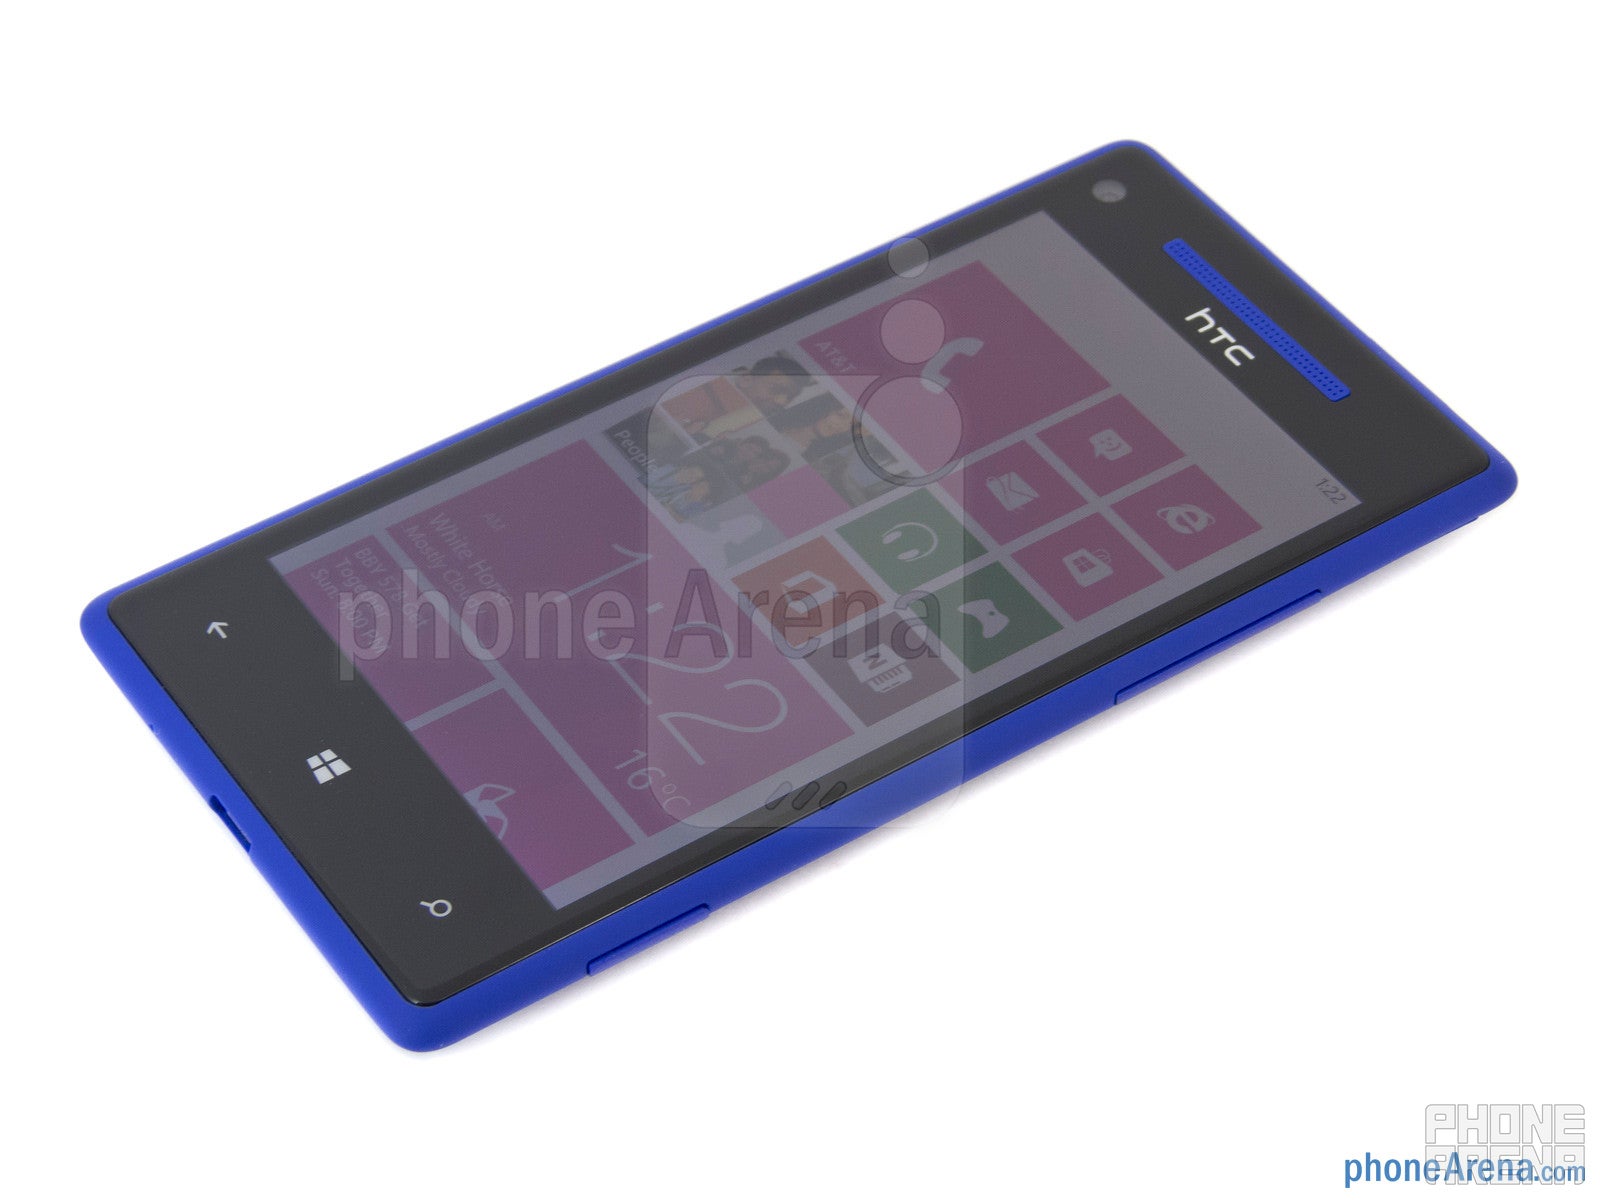 HTC Windows Phone 8X Review